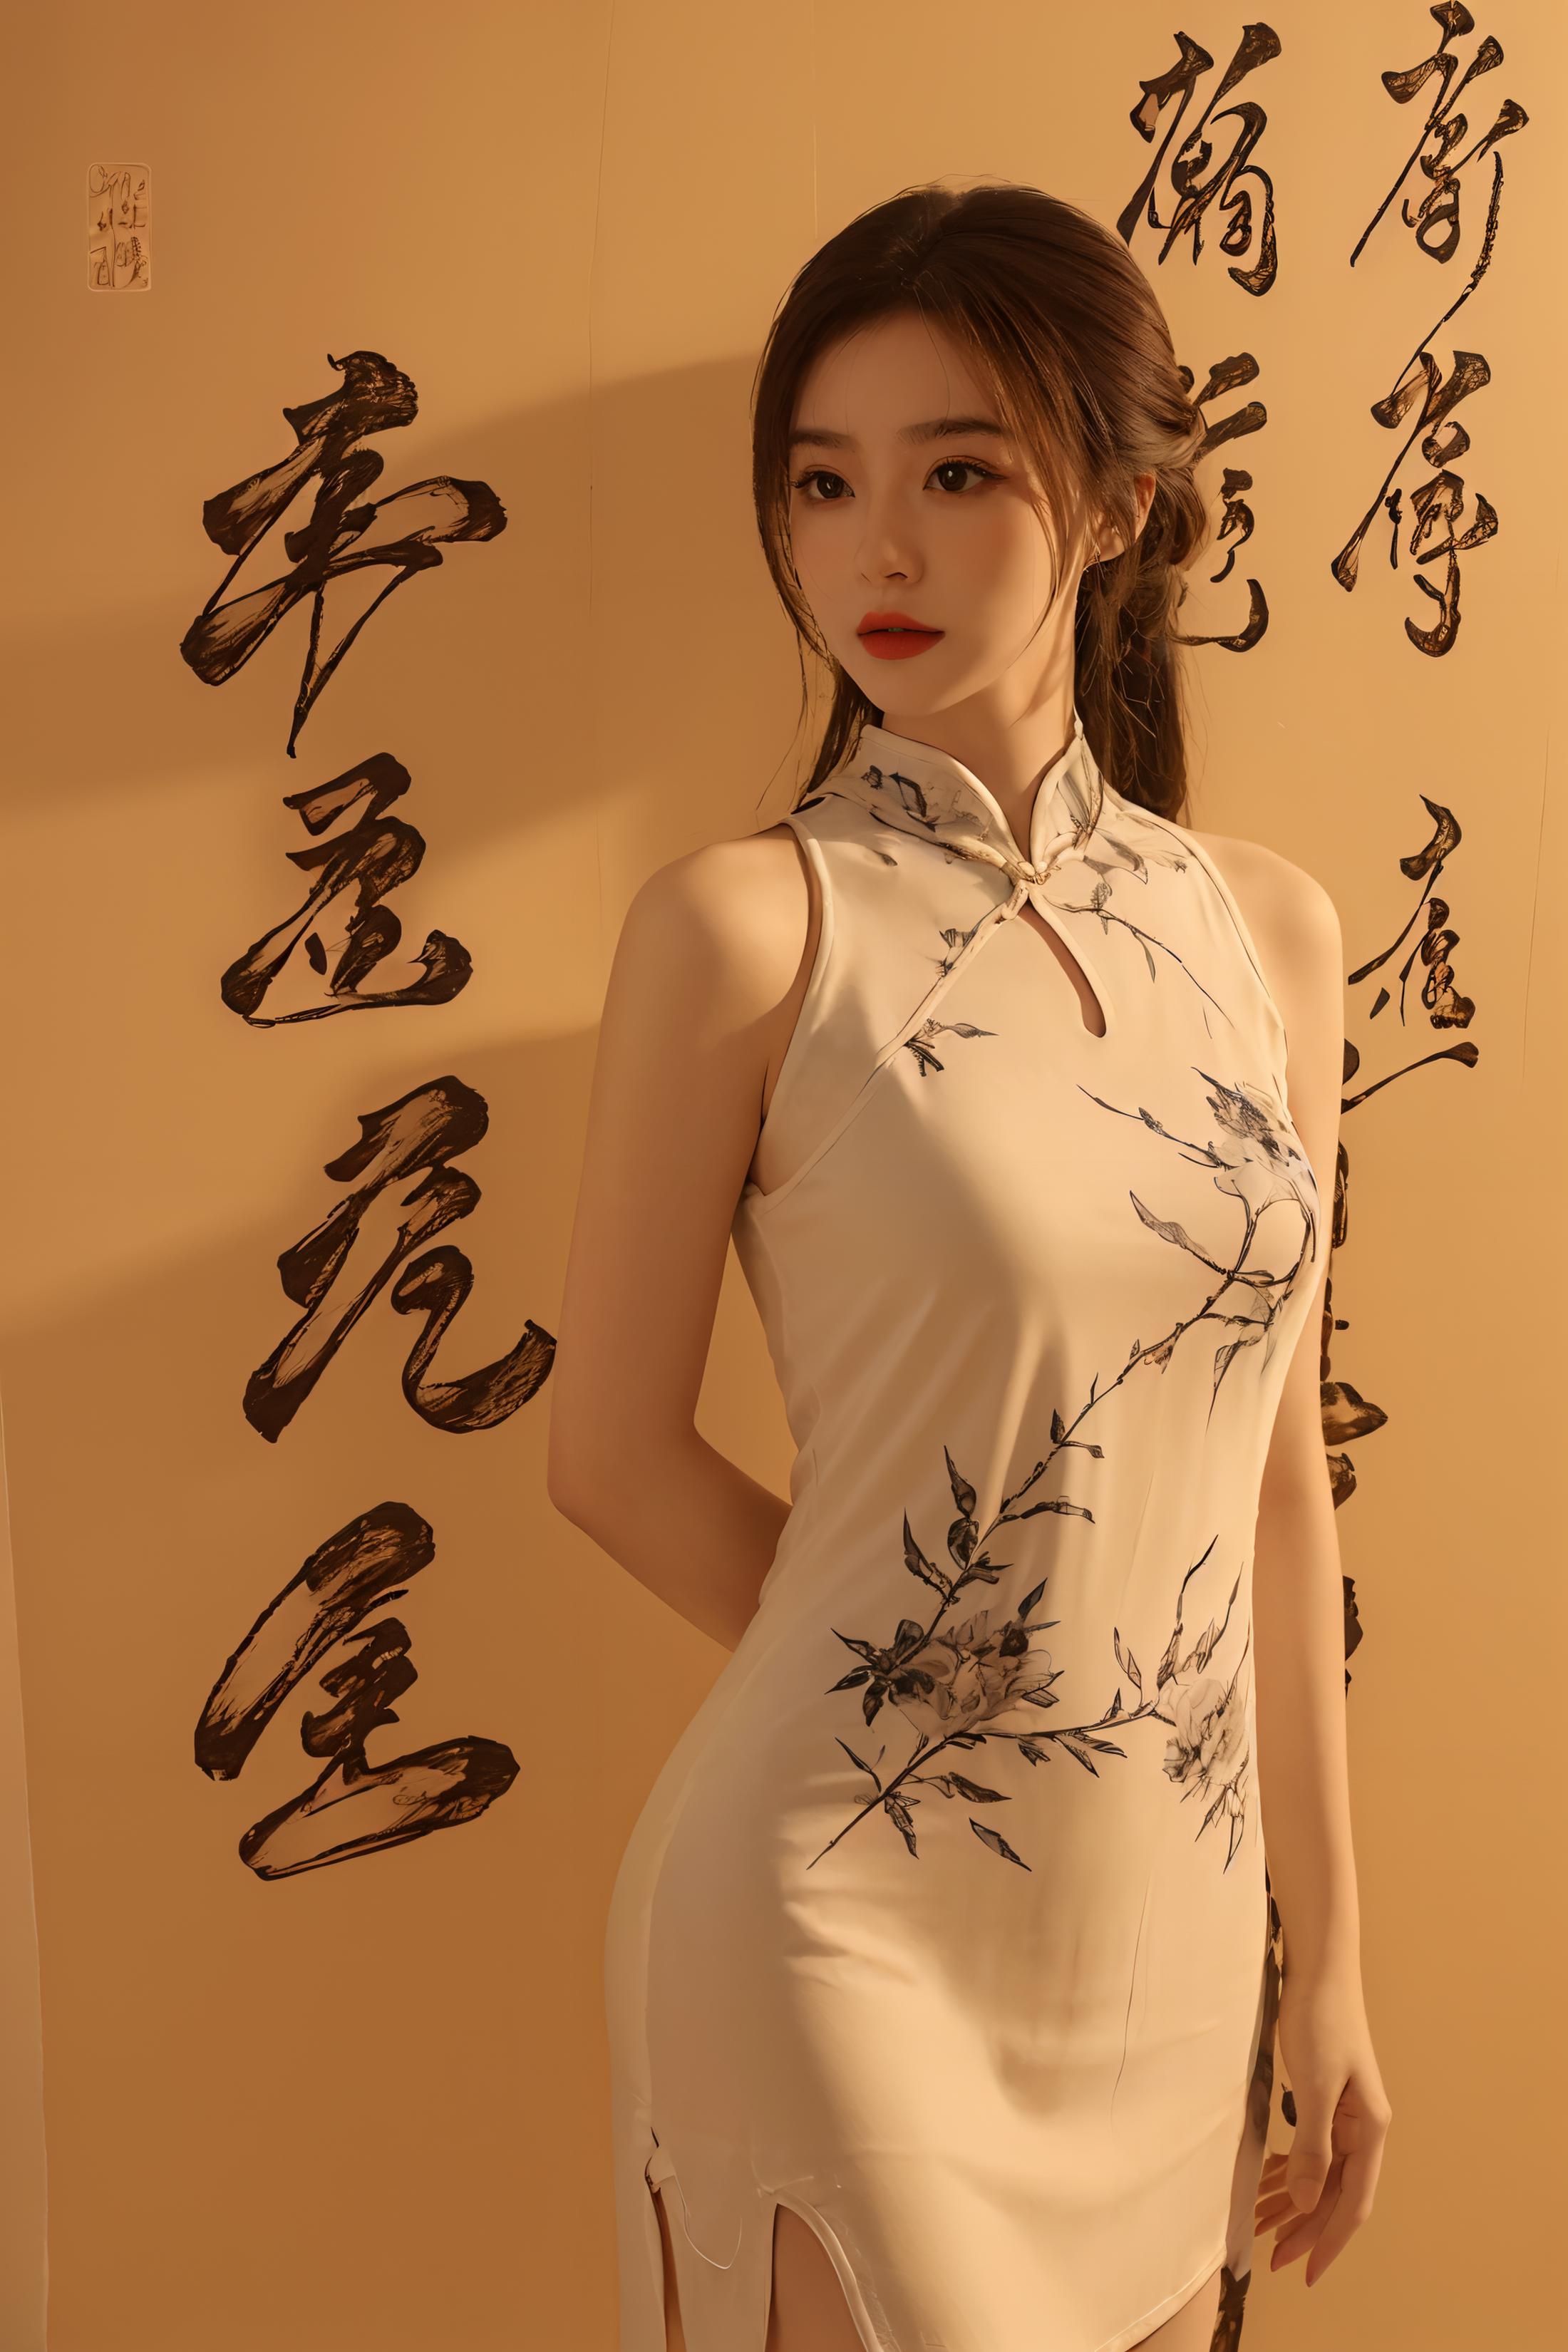 书法背景&新中式穿搭 | Calligraphy background & New Chinese style image by sapling